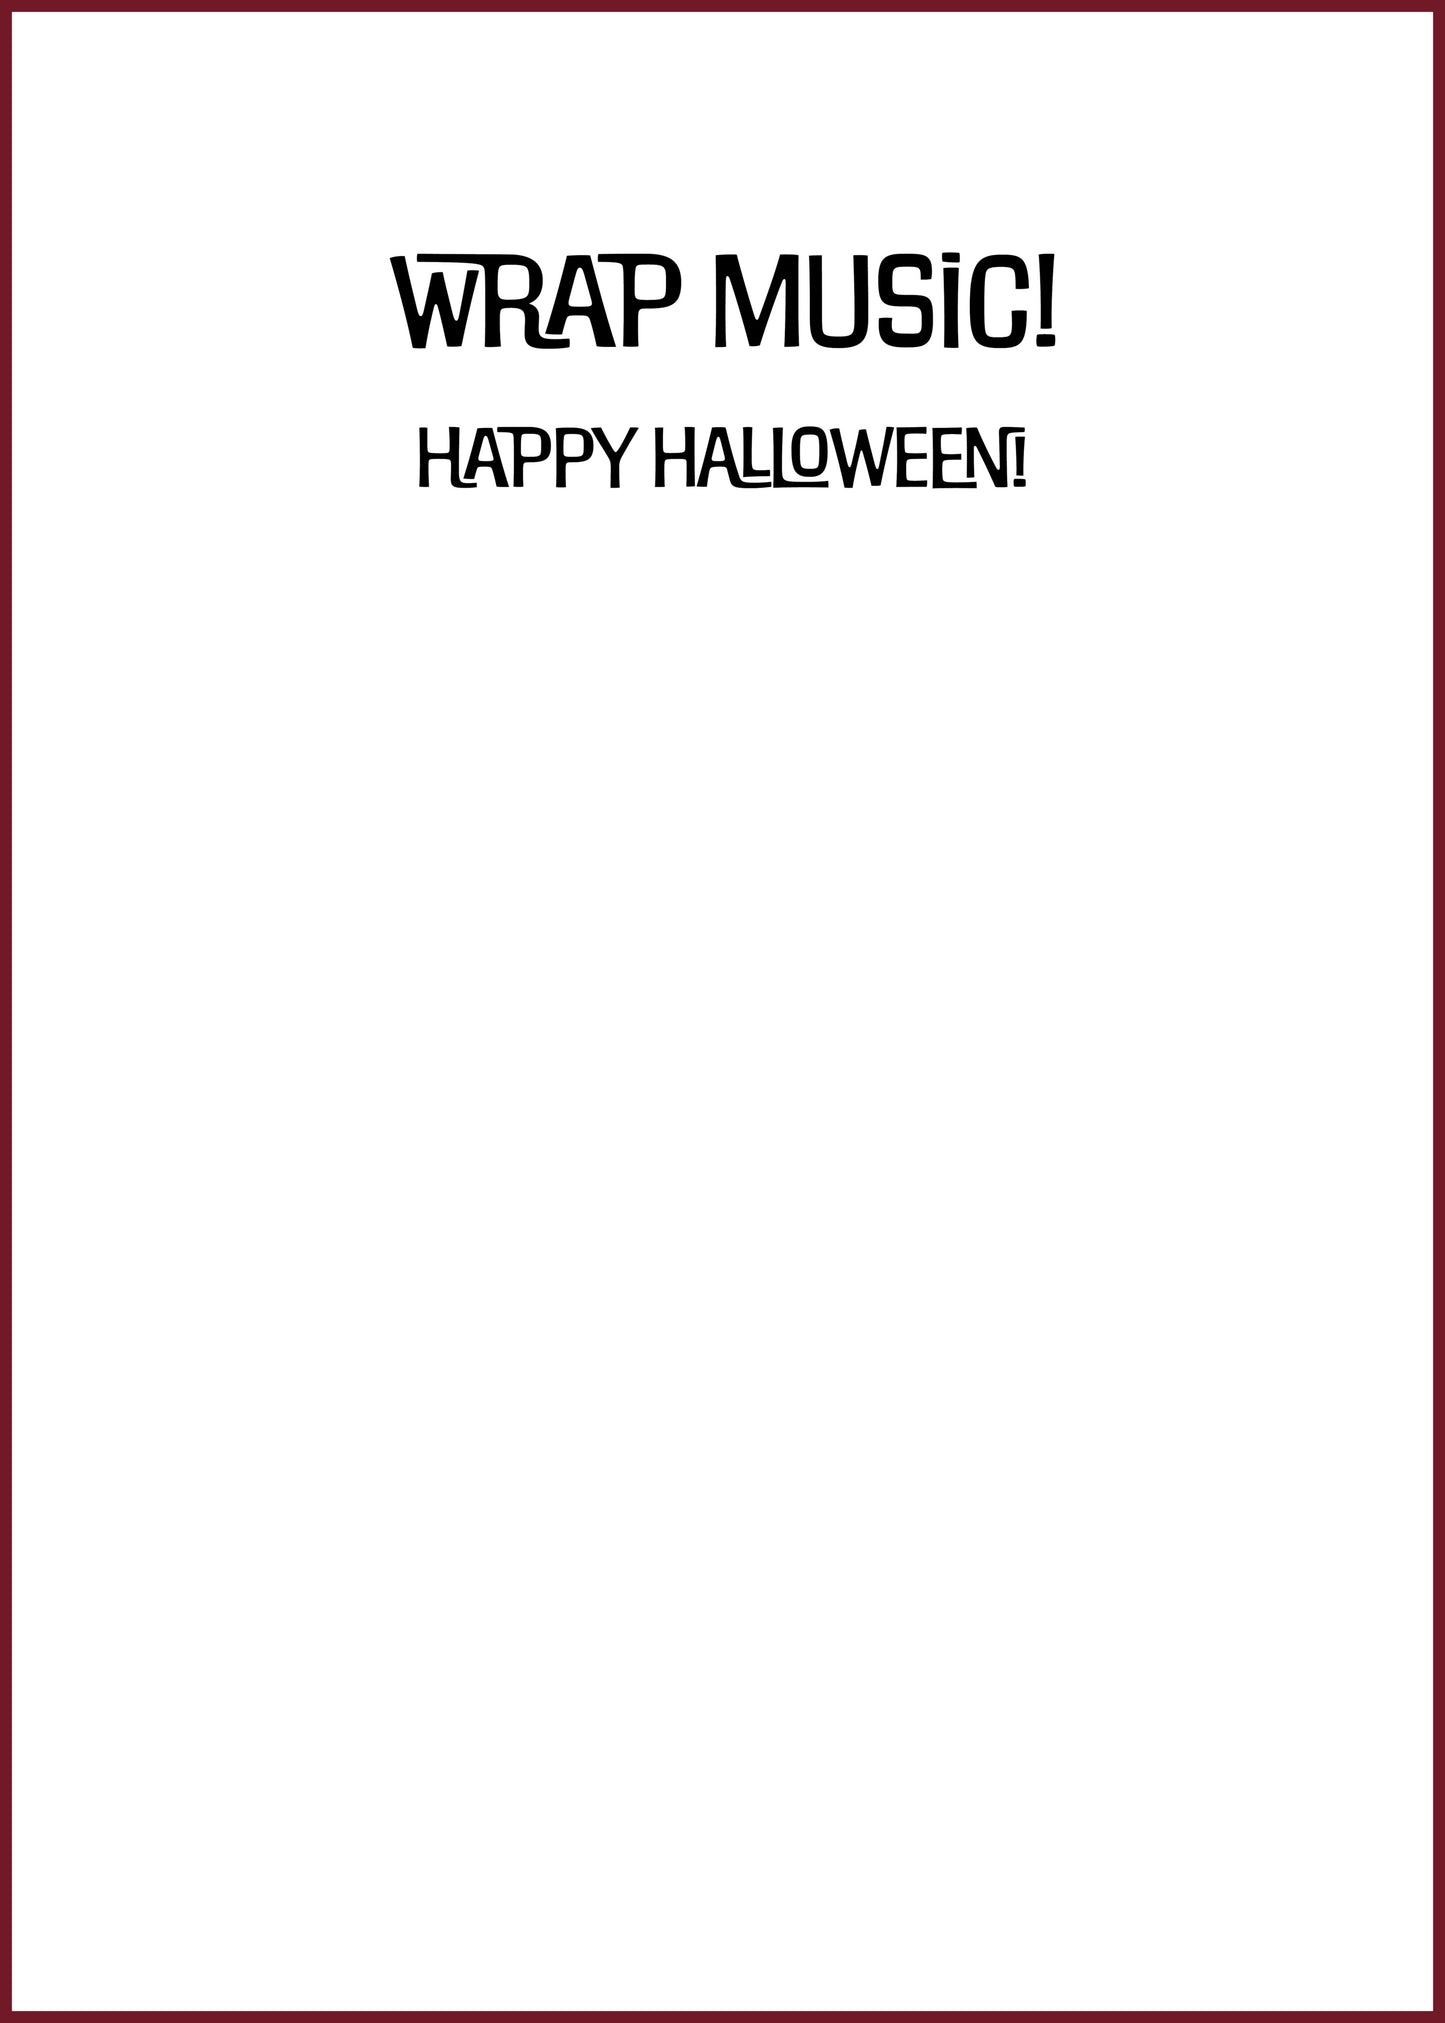 "Wrap Music" Greeting Card (Halloween)